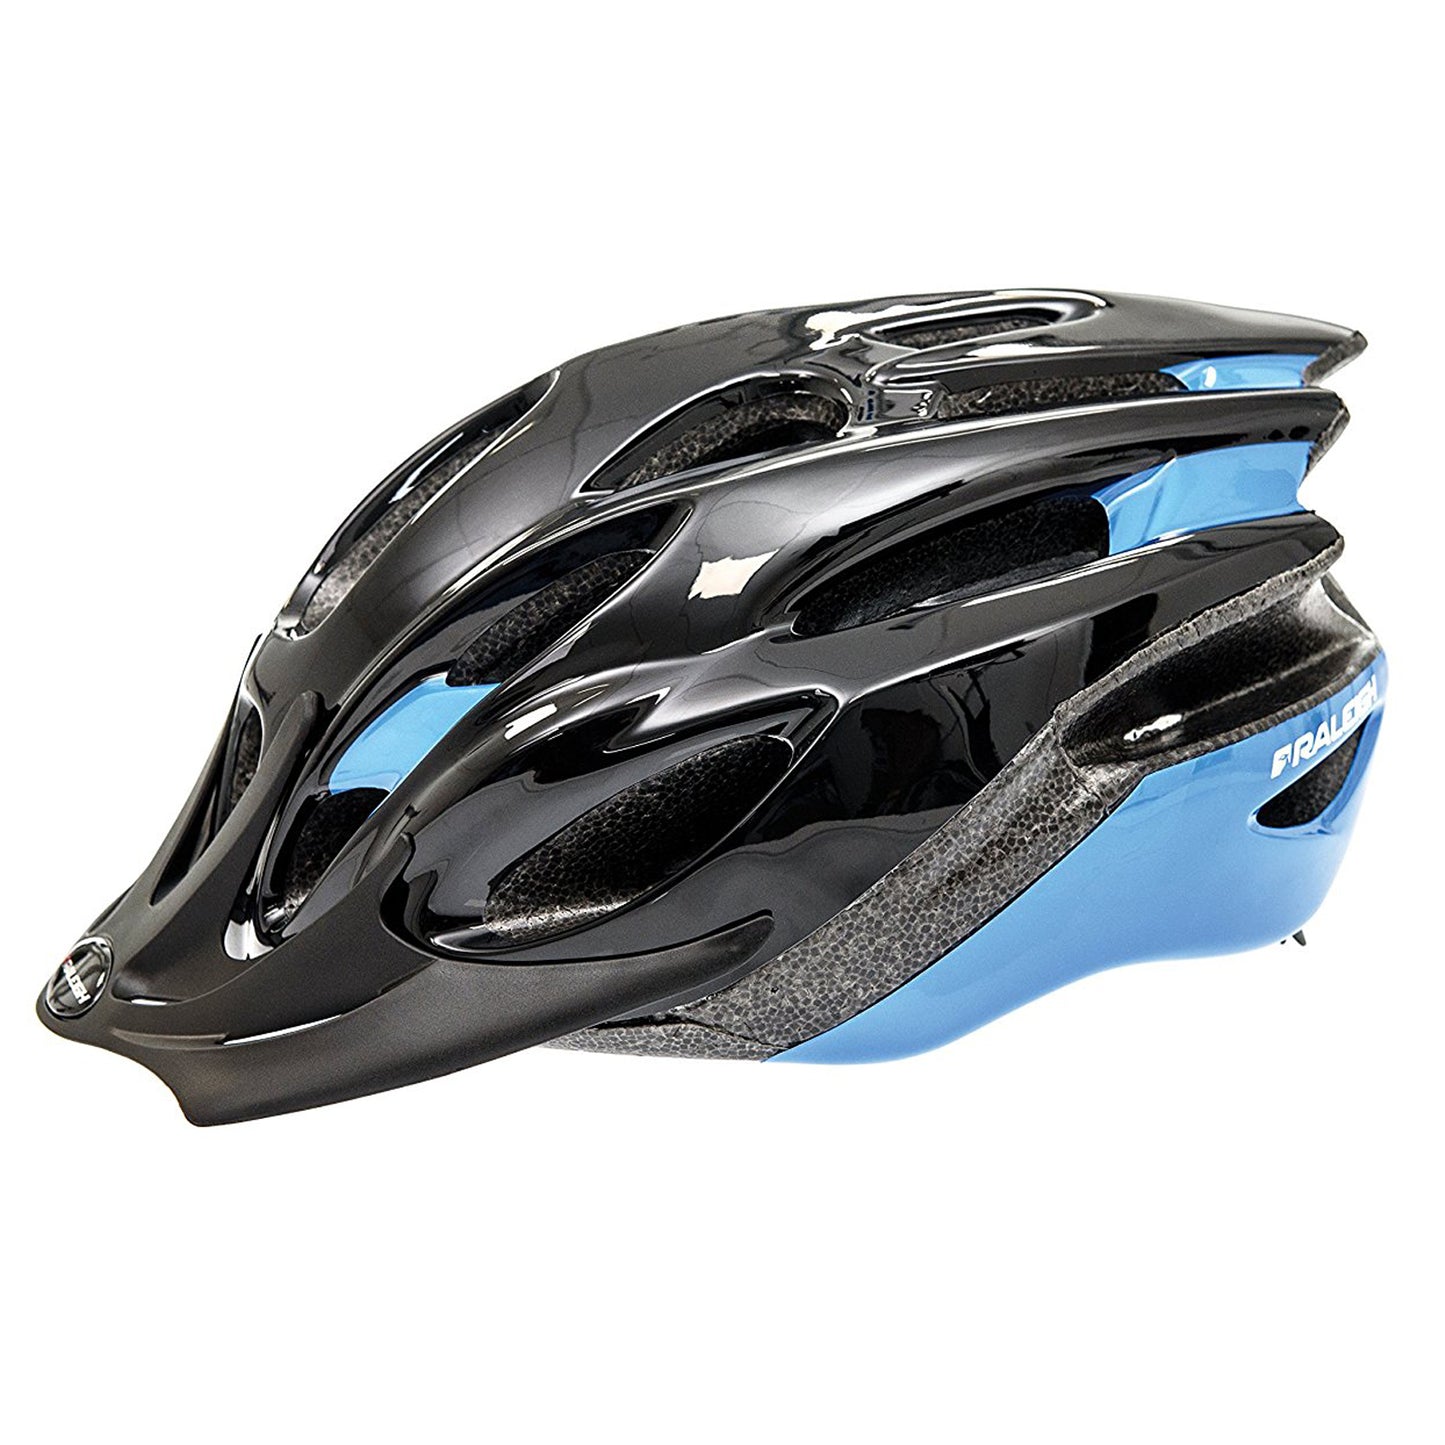 Raleigh Mission Evo Bike Helmet - 24 Vents - 54-58cm Medium - Black/Blue Alternate 2